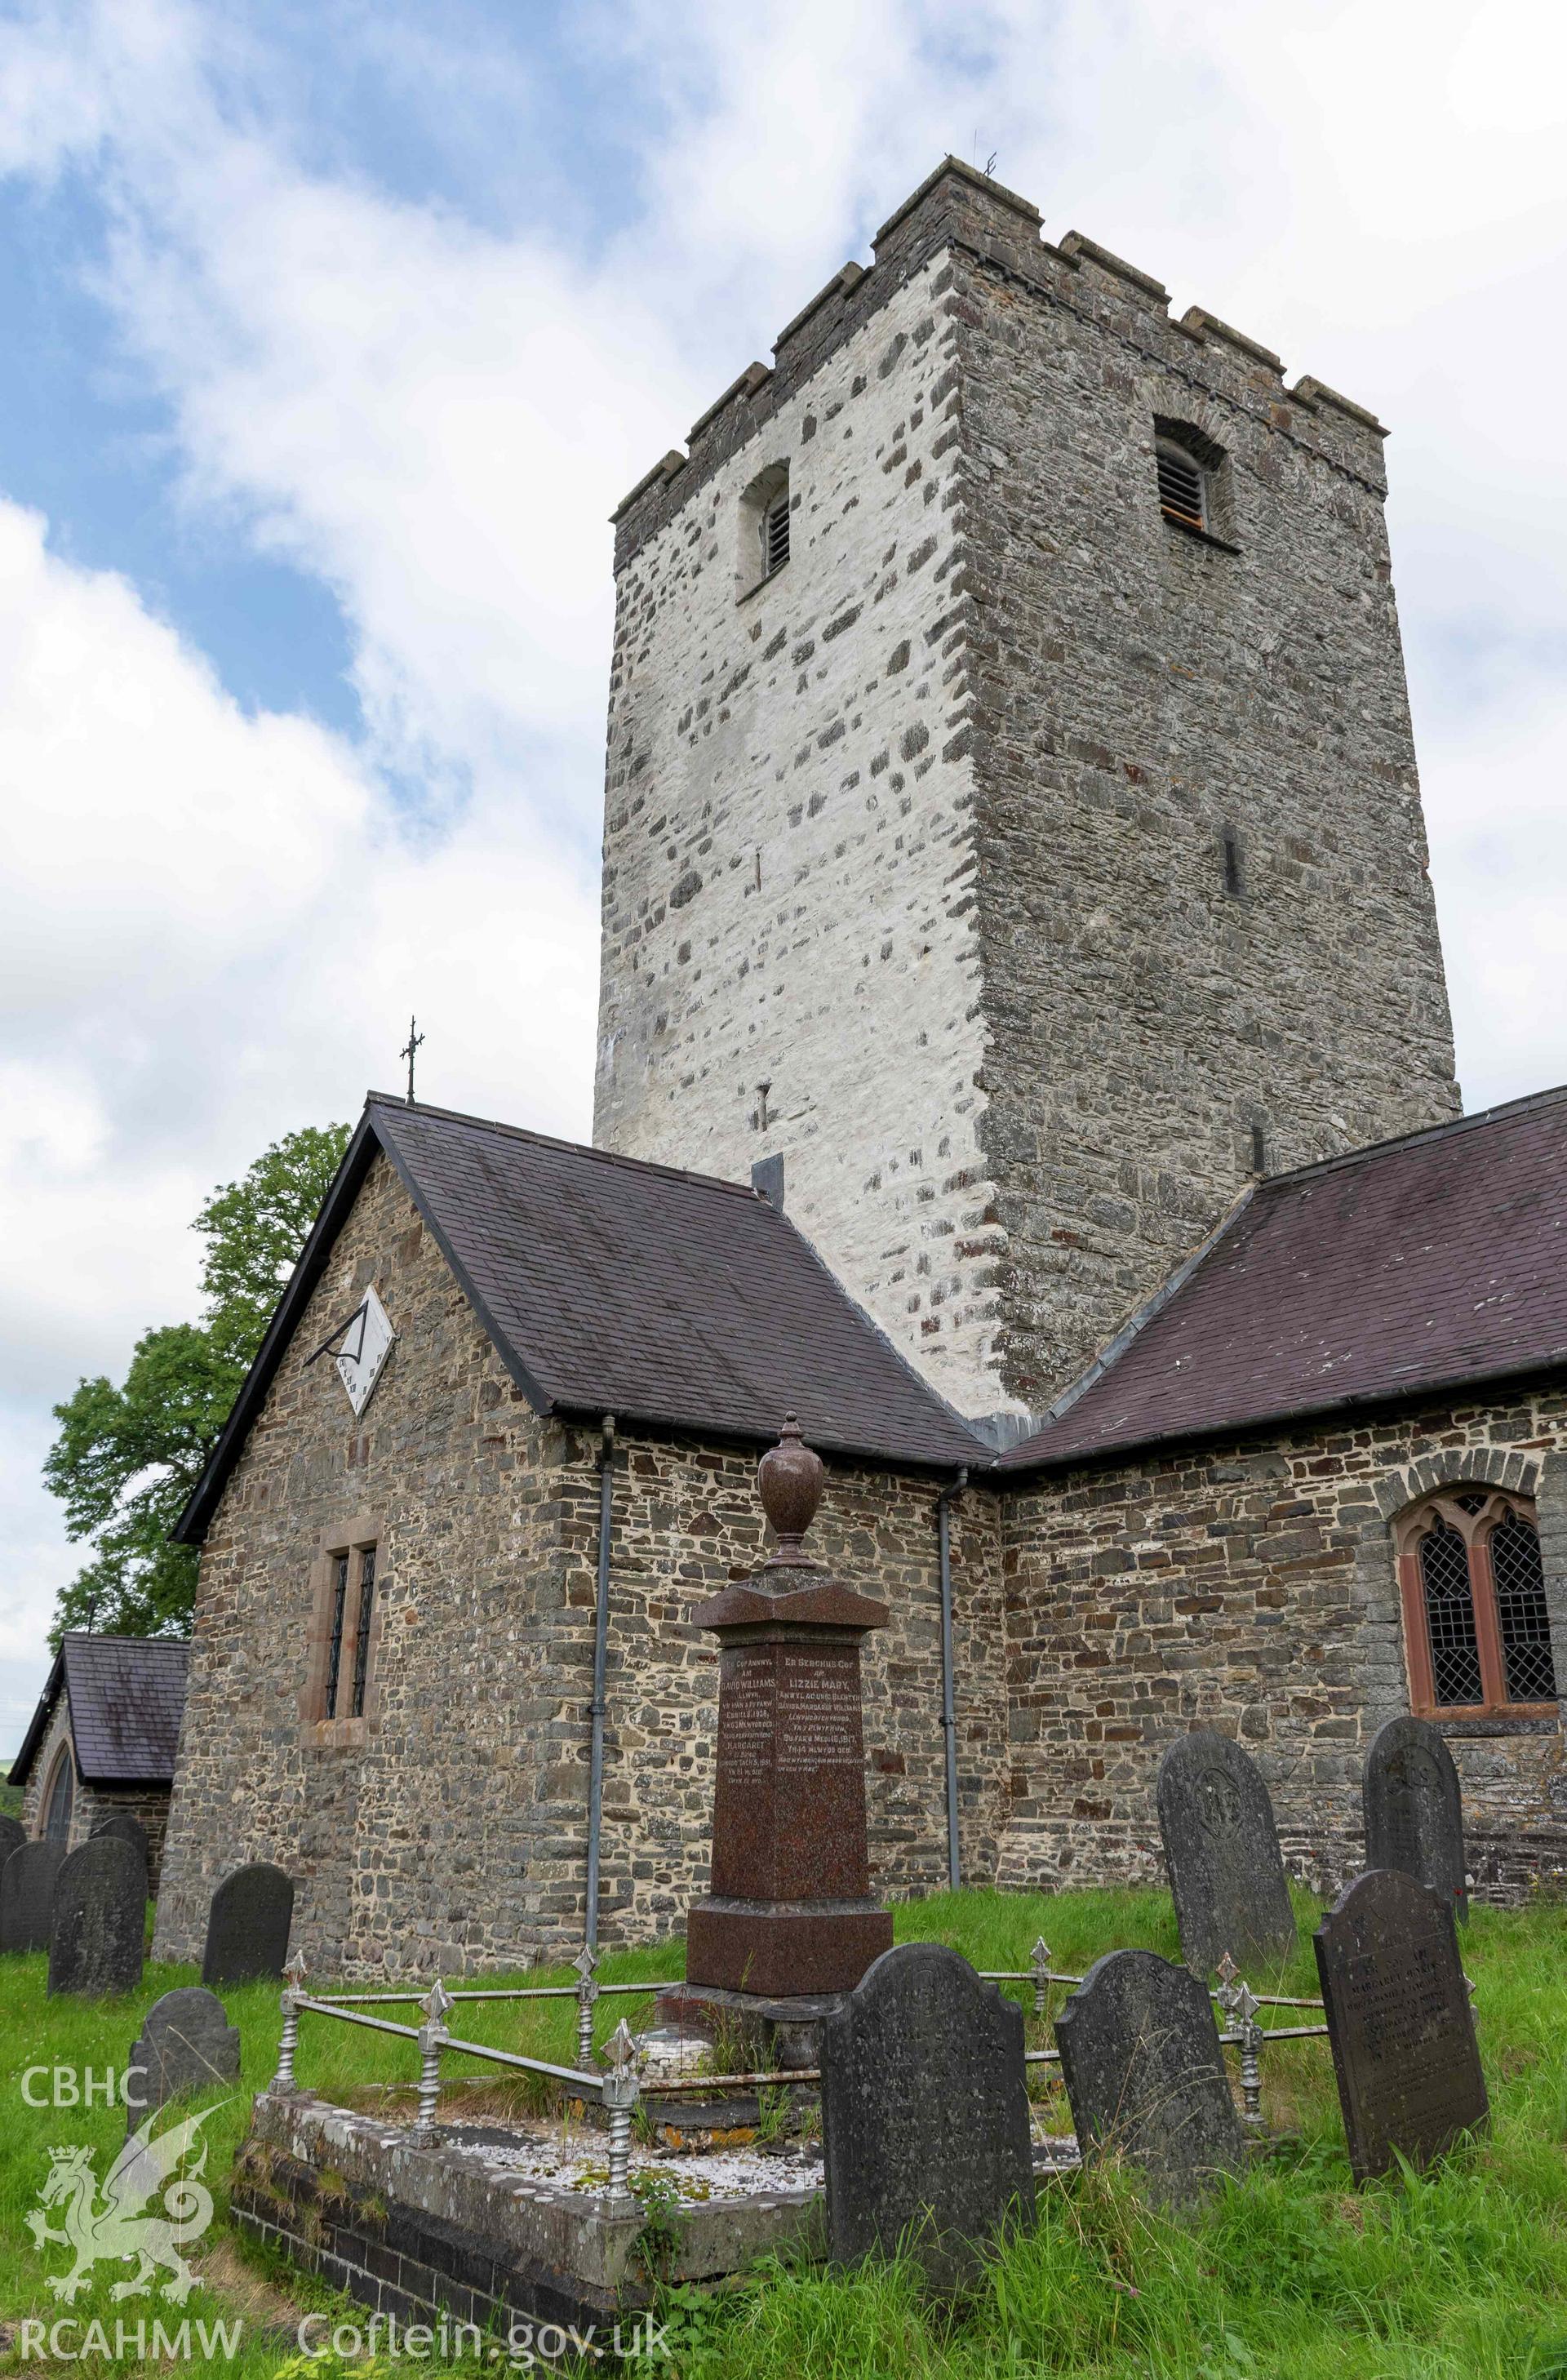 St Michael's Church, Llanfihangel y Creuddyn. Exterior view from the southeast.